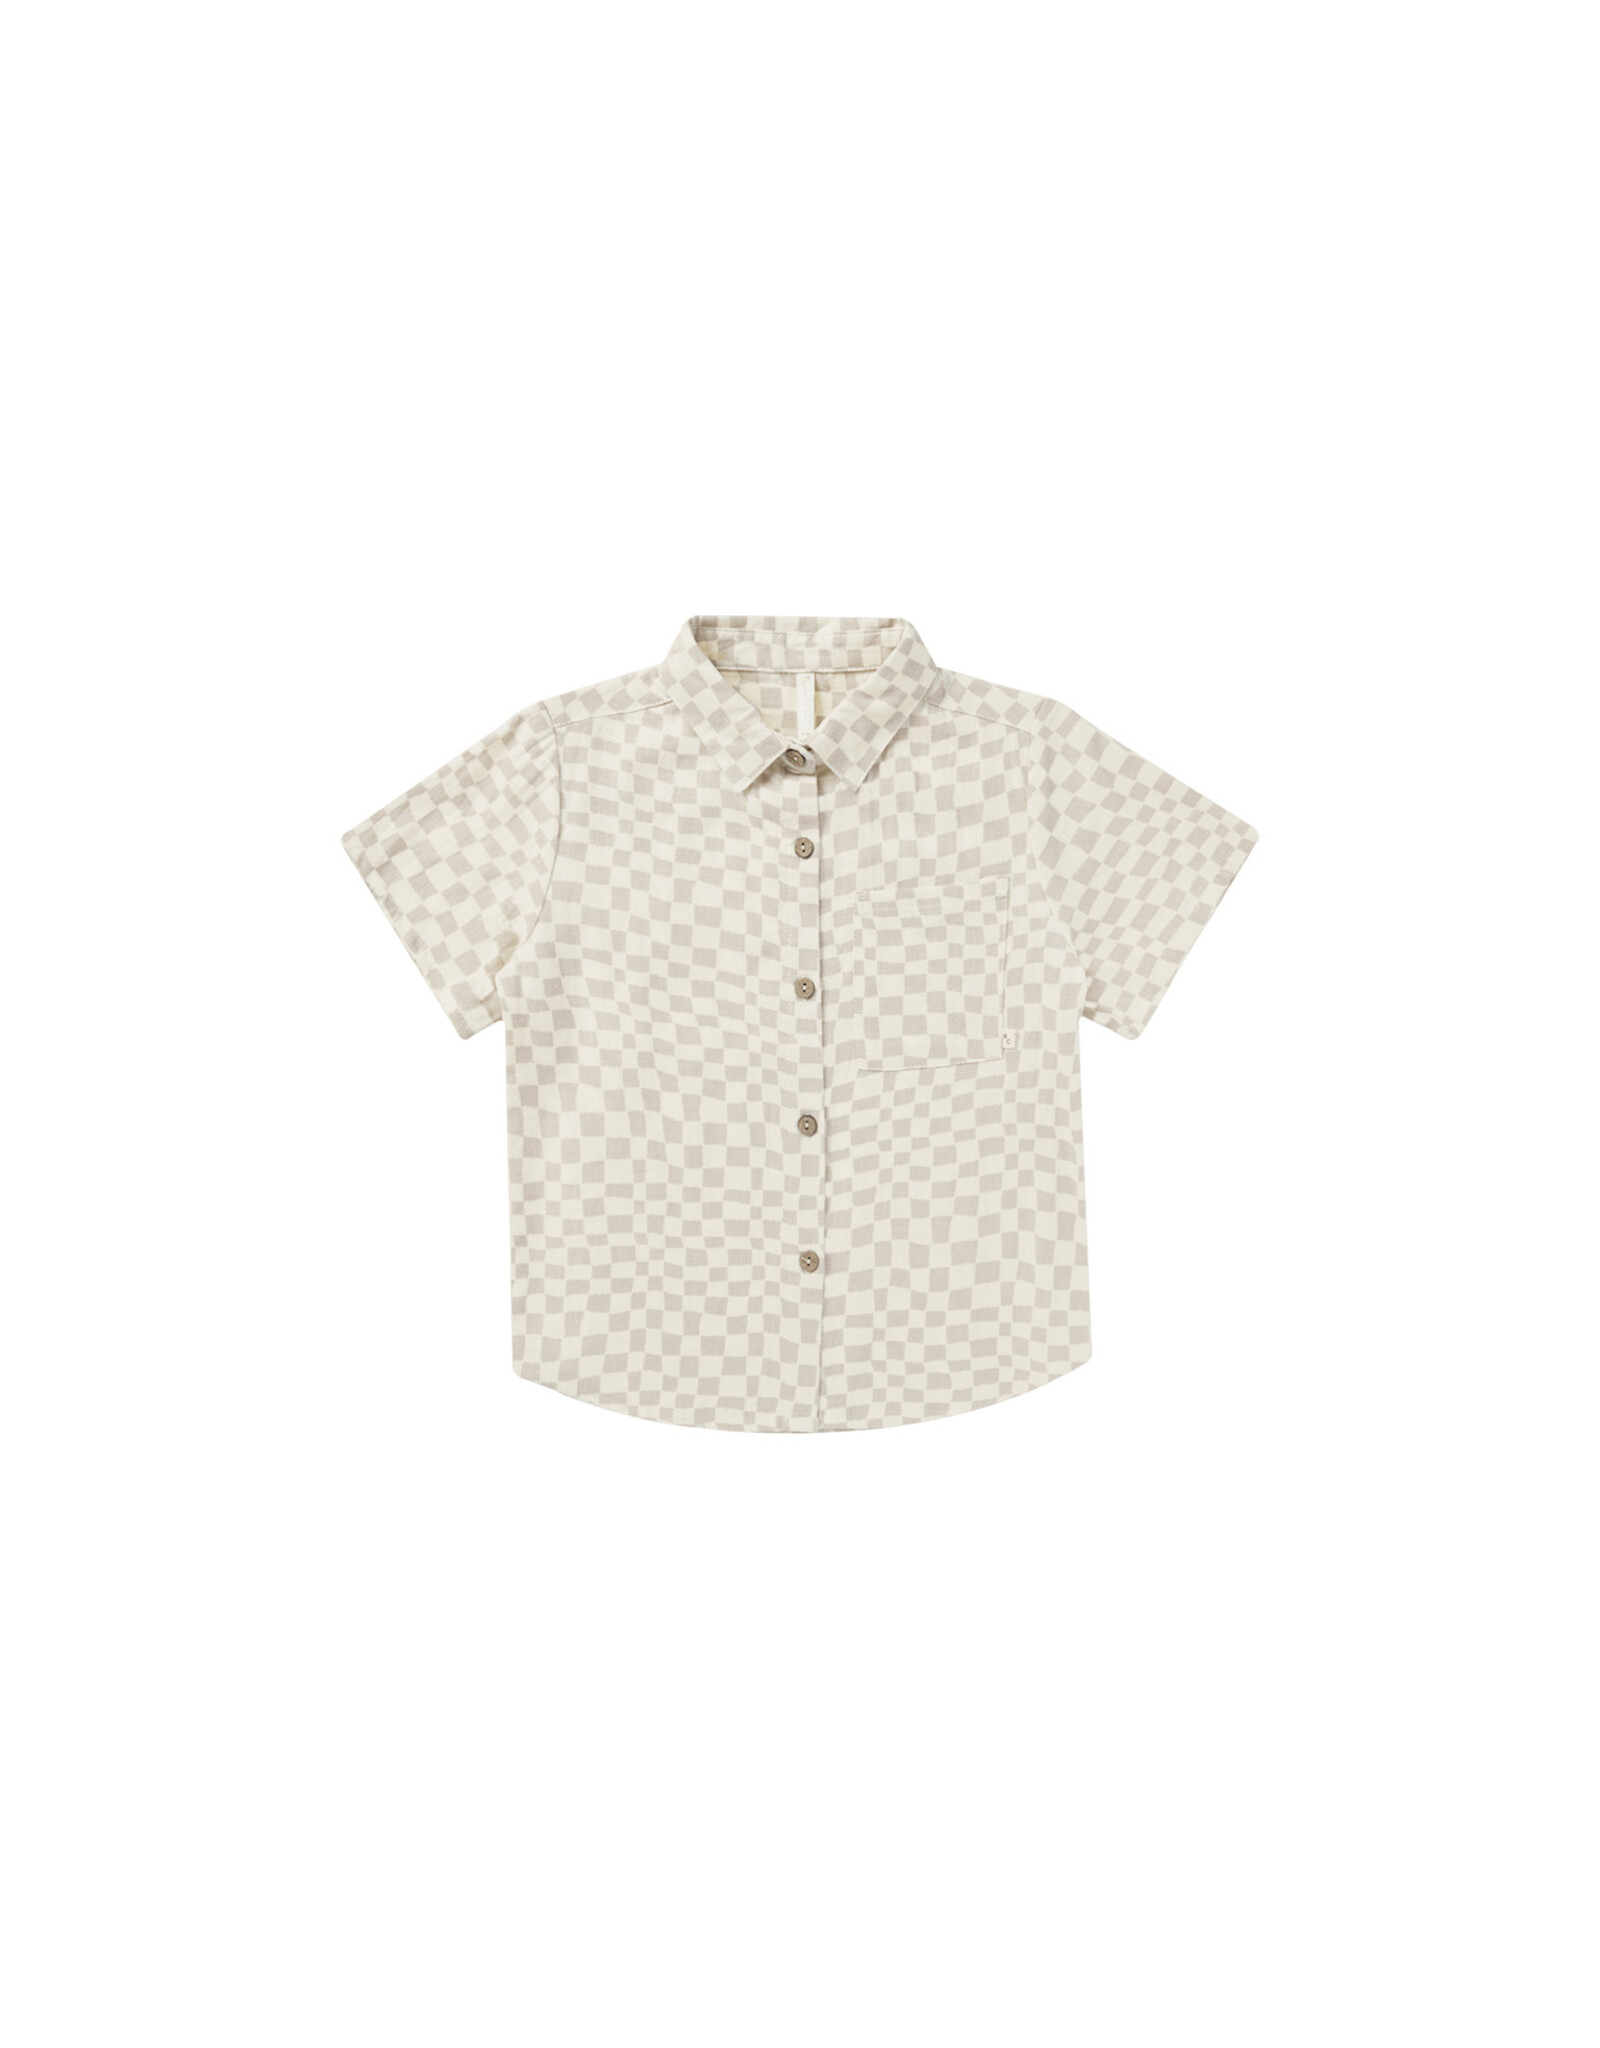 Rylee+Cru 2-3YO: Collared Short Sleeve Shirt - Dove Check